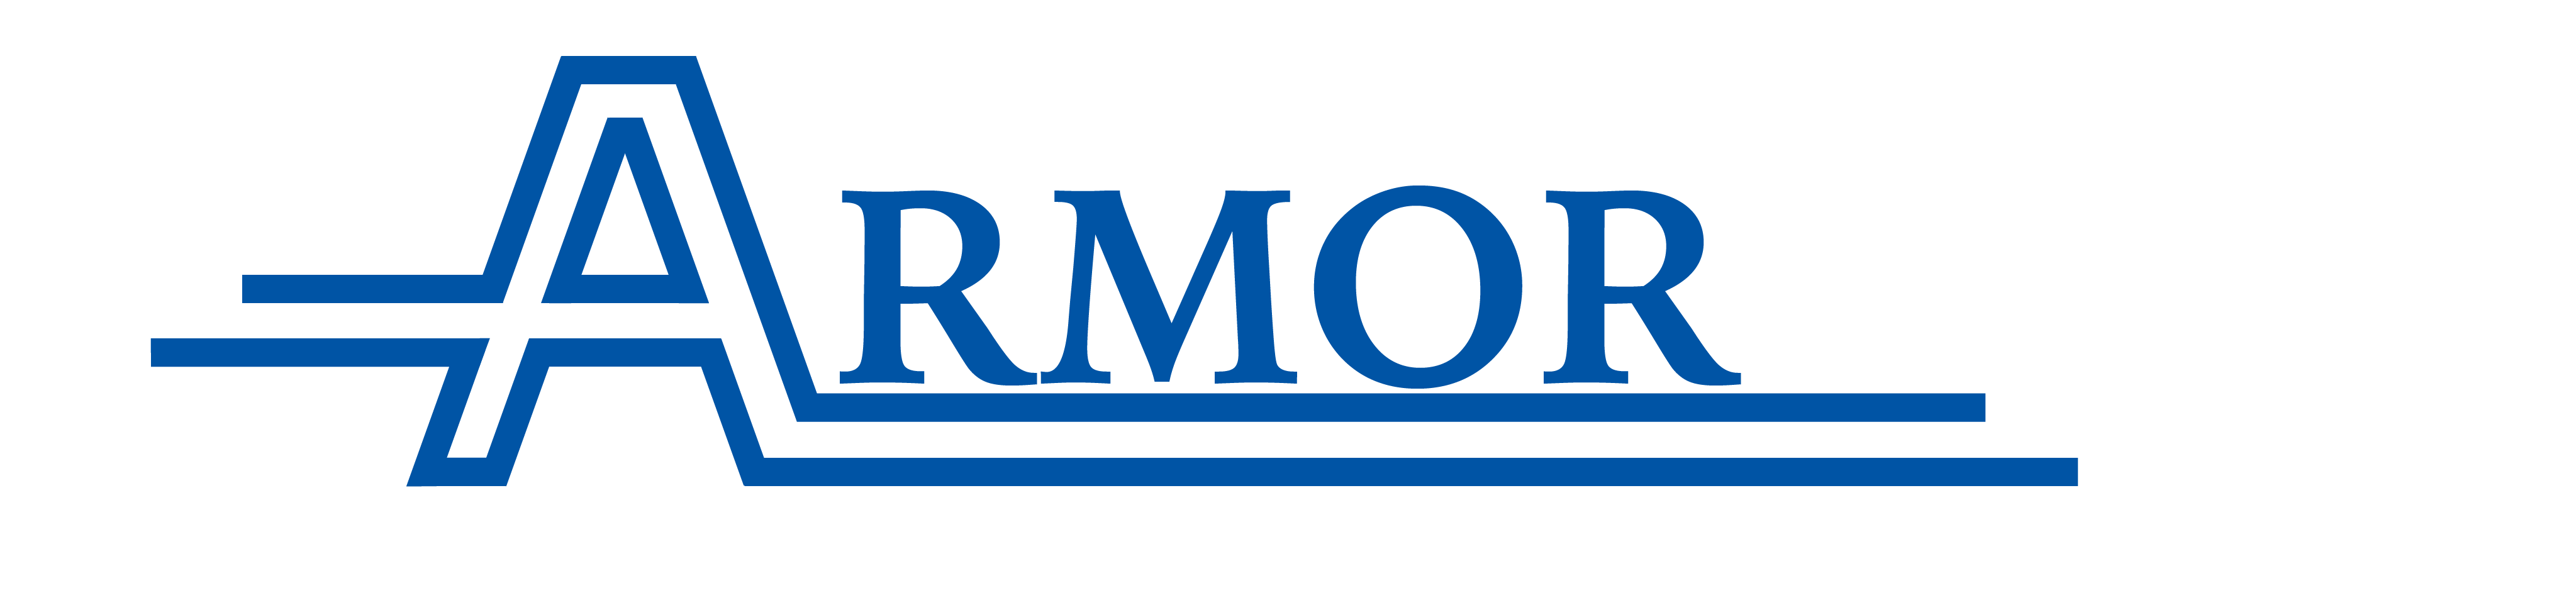 Armor Industries Ltd.